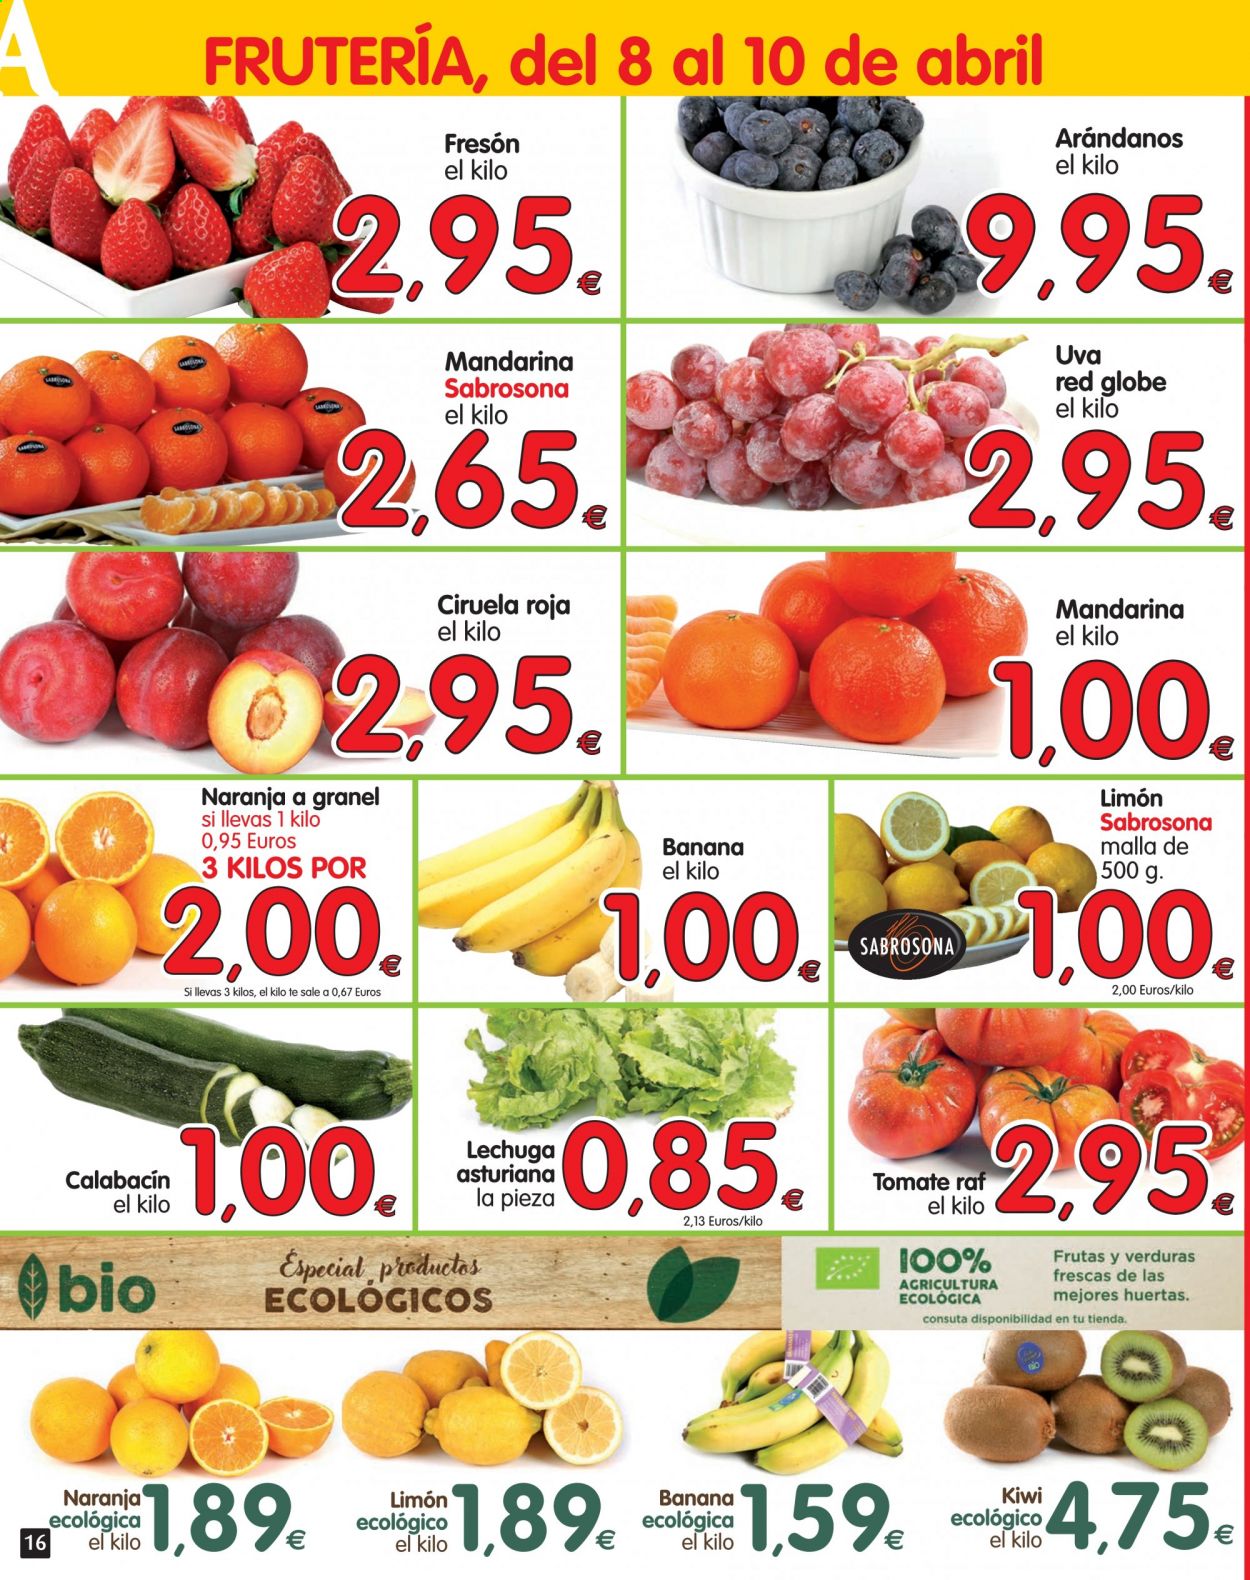 thumbnail - Folleto actual Alimerka - 08/04/21 - 21/04/21 - Ventas - banana, uva, kiwi, arándano, ciruela, limón, mandarina, naranja, tomate, lechuga, calabacín. Página 16.